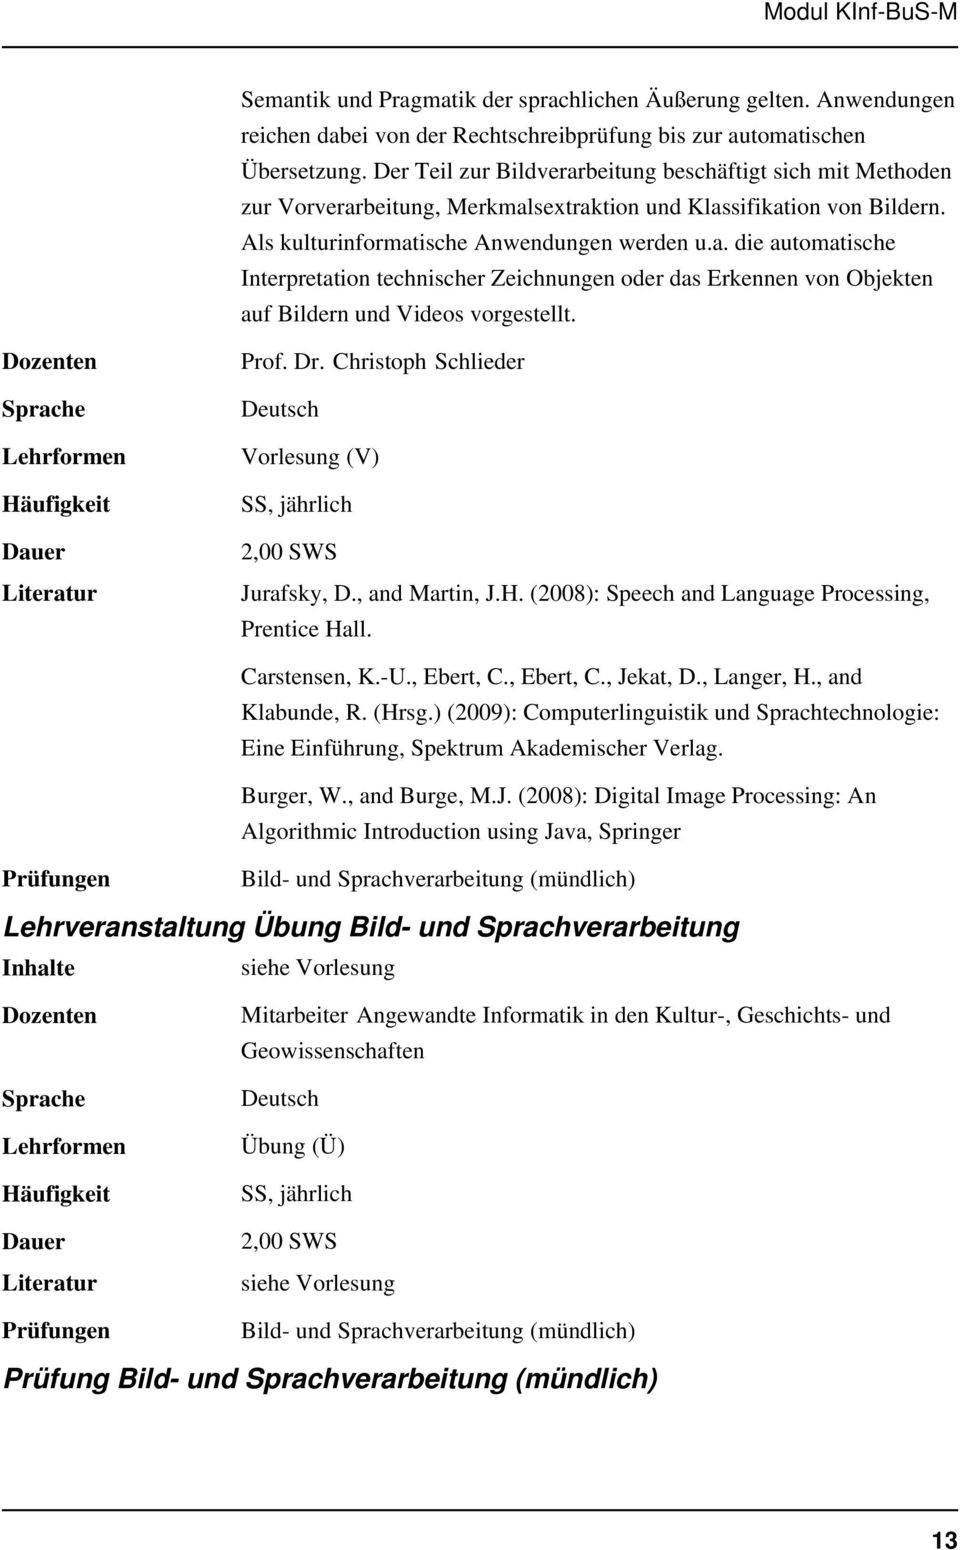 Prof. Dr.-Christoph-Schlieder Vorlesung (V) SS, jährlich Jurafsky, D., and Martin, J.H. (2008): Speech and Language Processing, Prentice Hall. Carstensen, K.-U., Ebert, C., Ebert, C., Jekat, D.